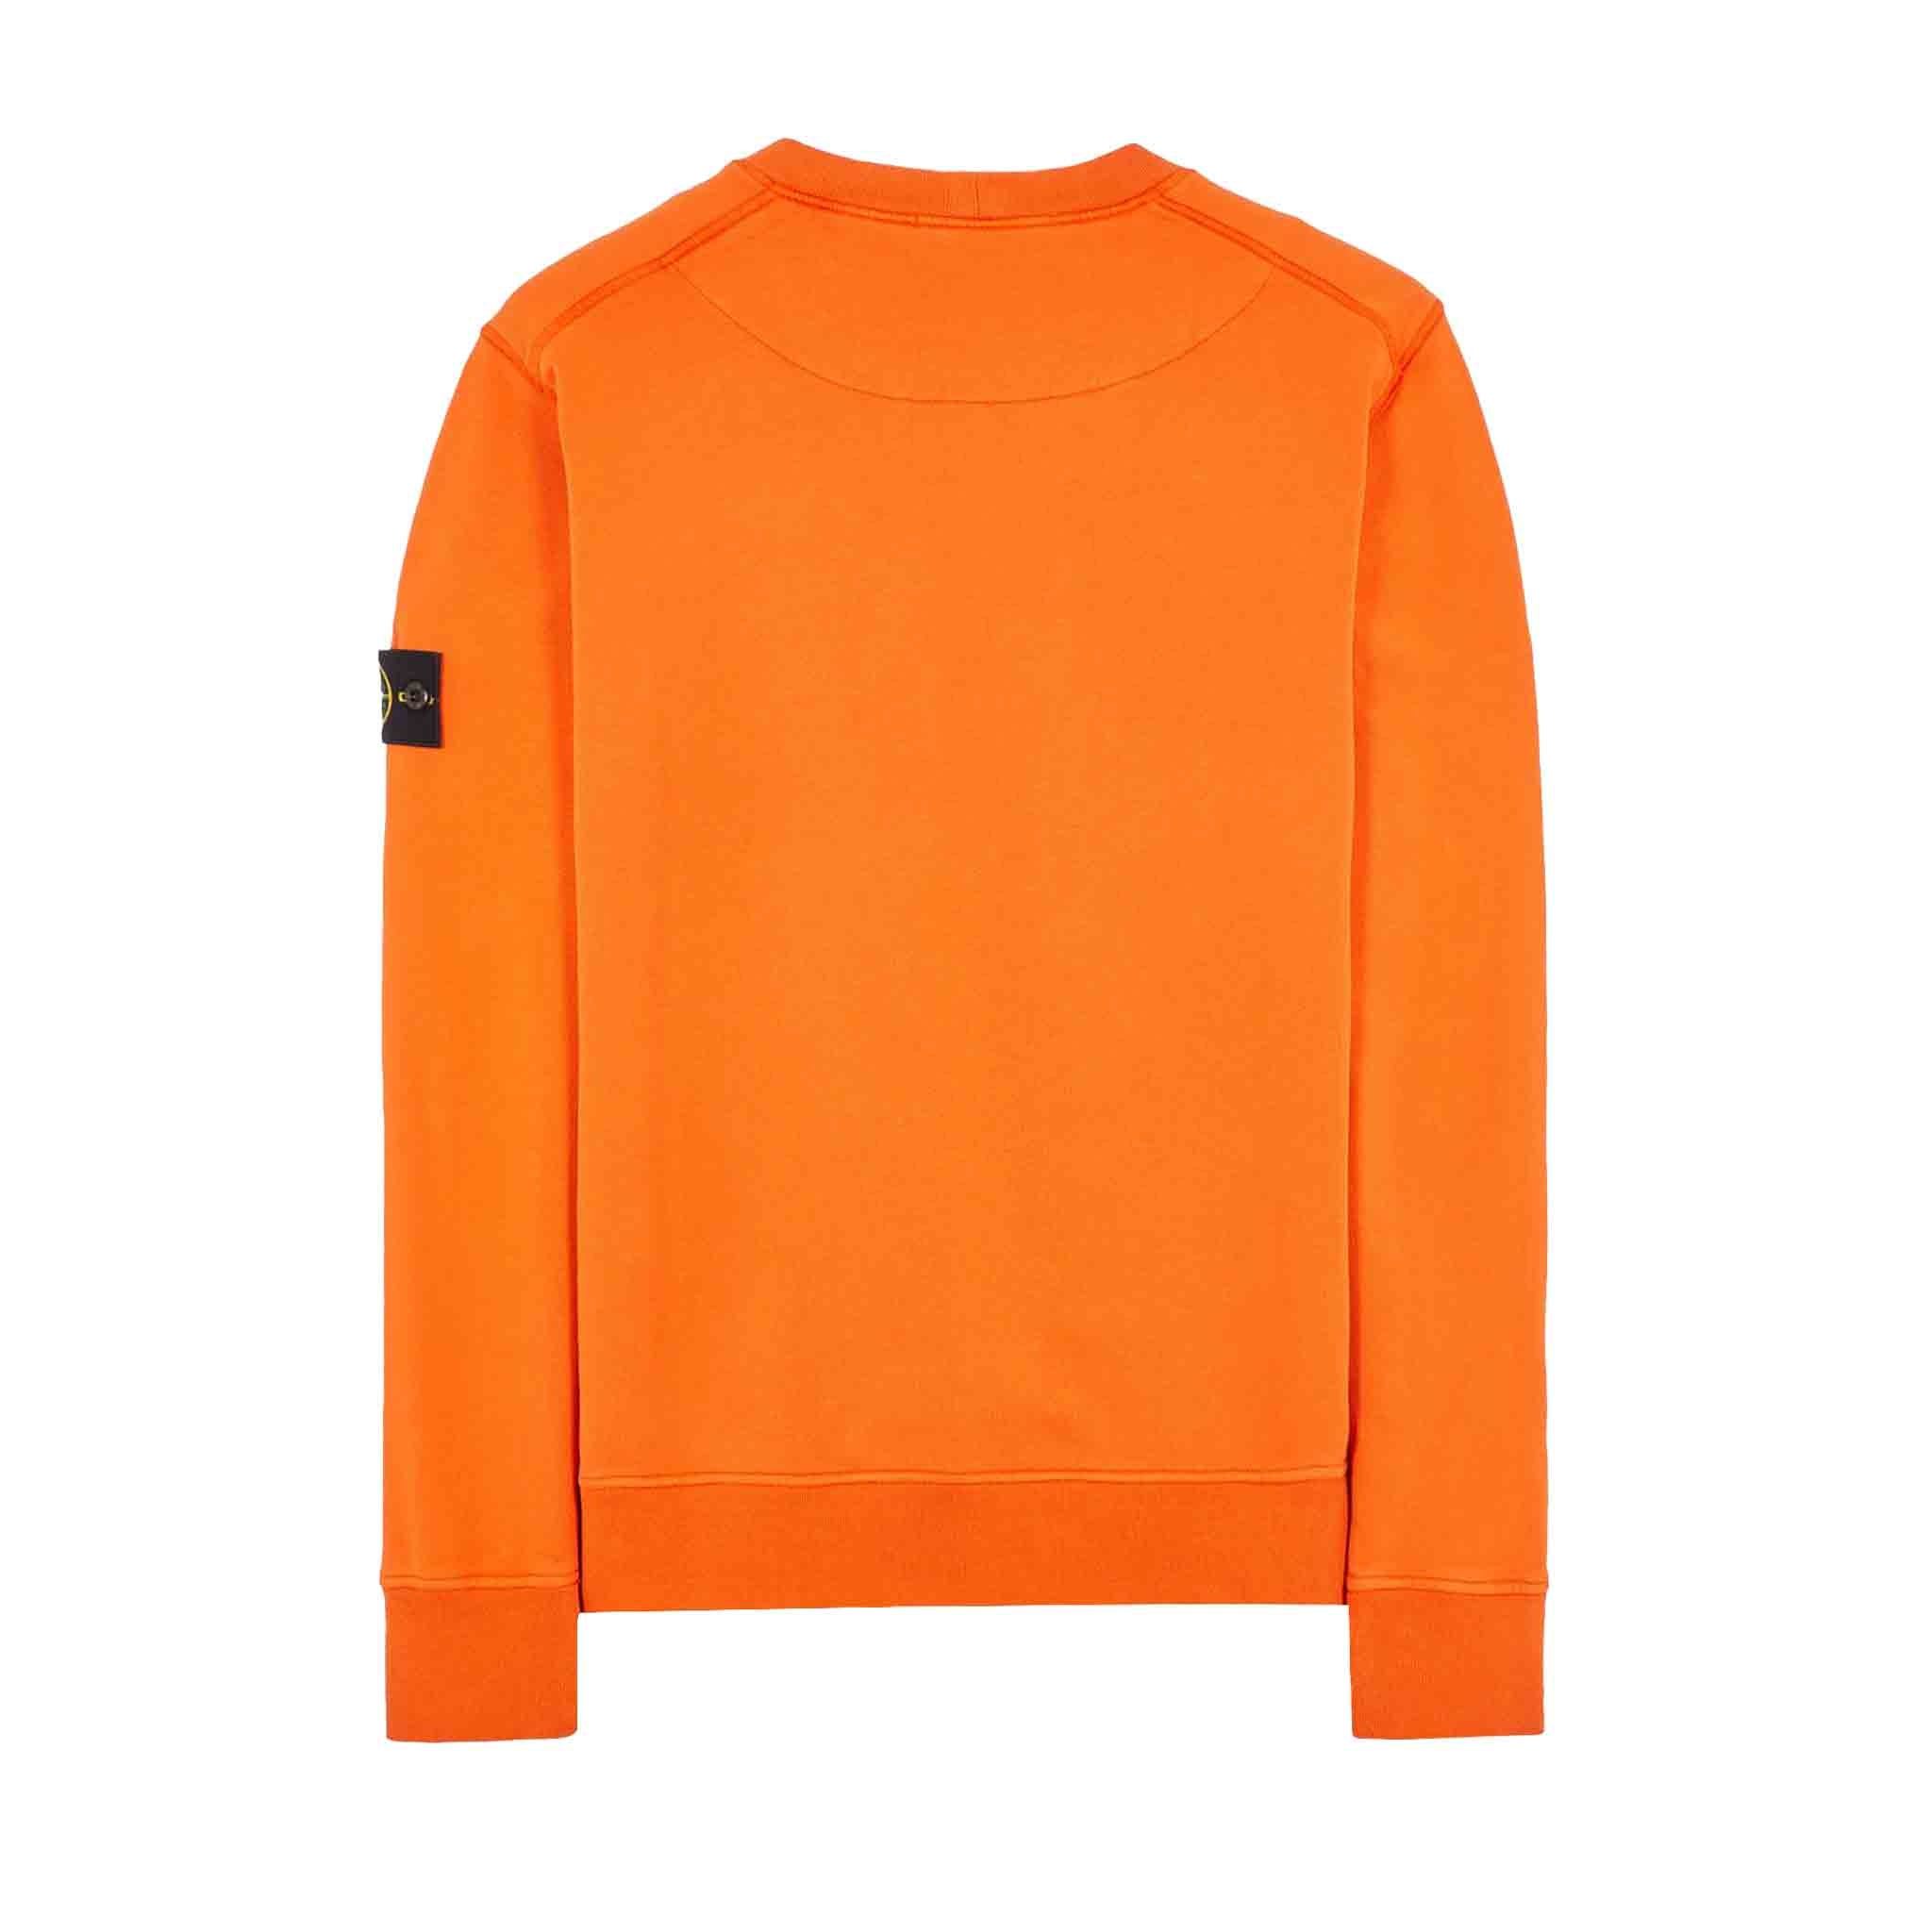 Stone Island Garment Dyed Crewneck Sweatshirt in Orange